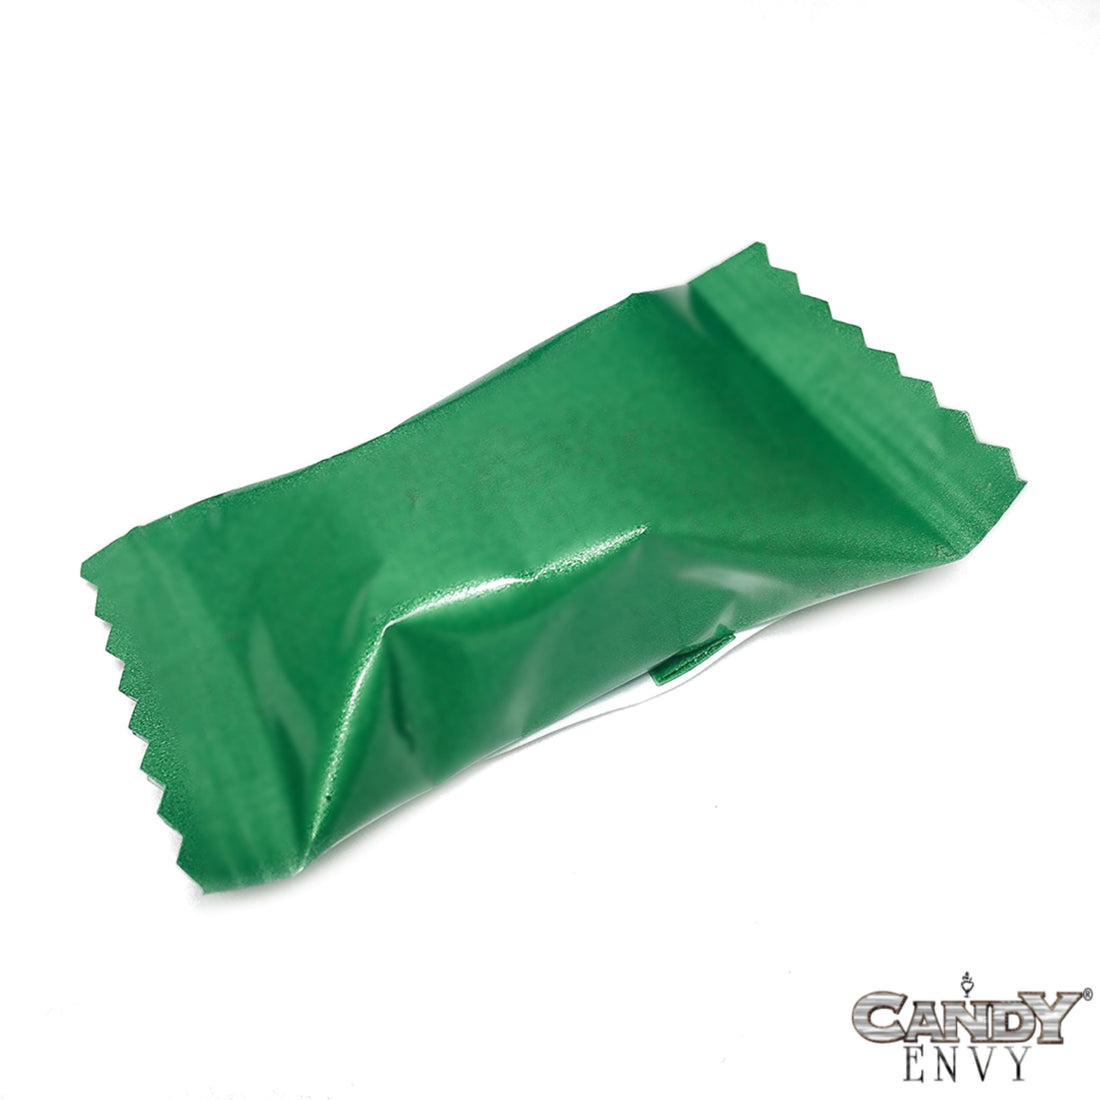 Green Buttermints - 13 oz Bag